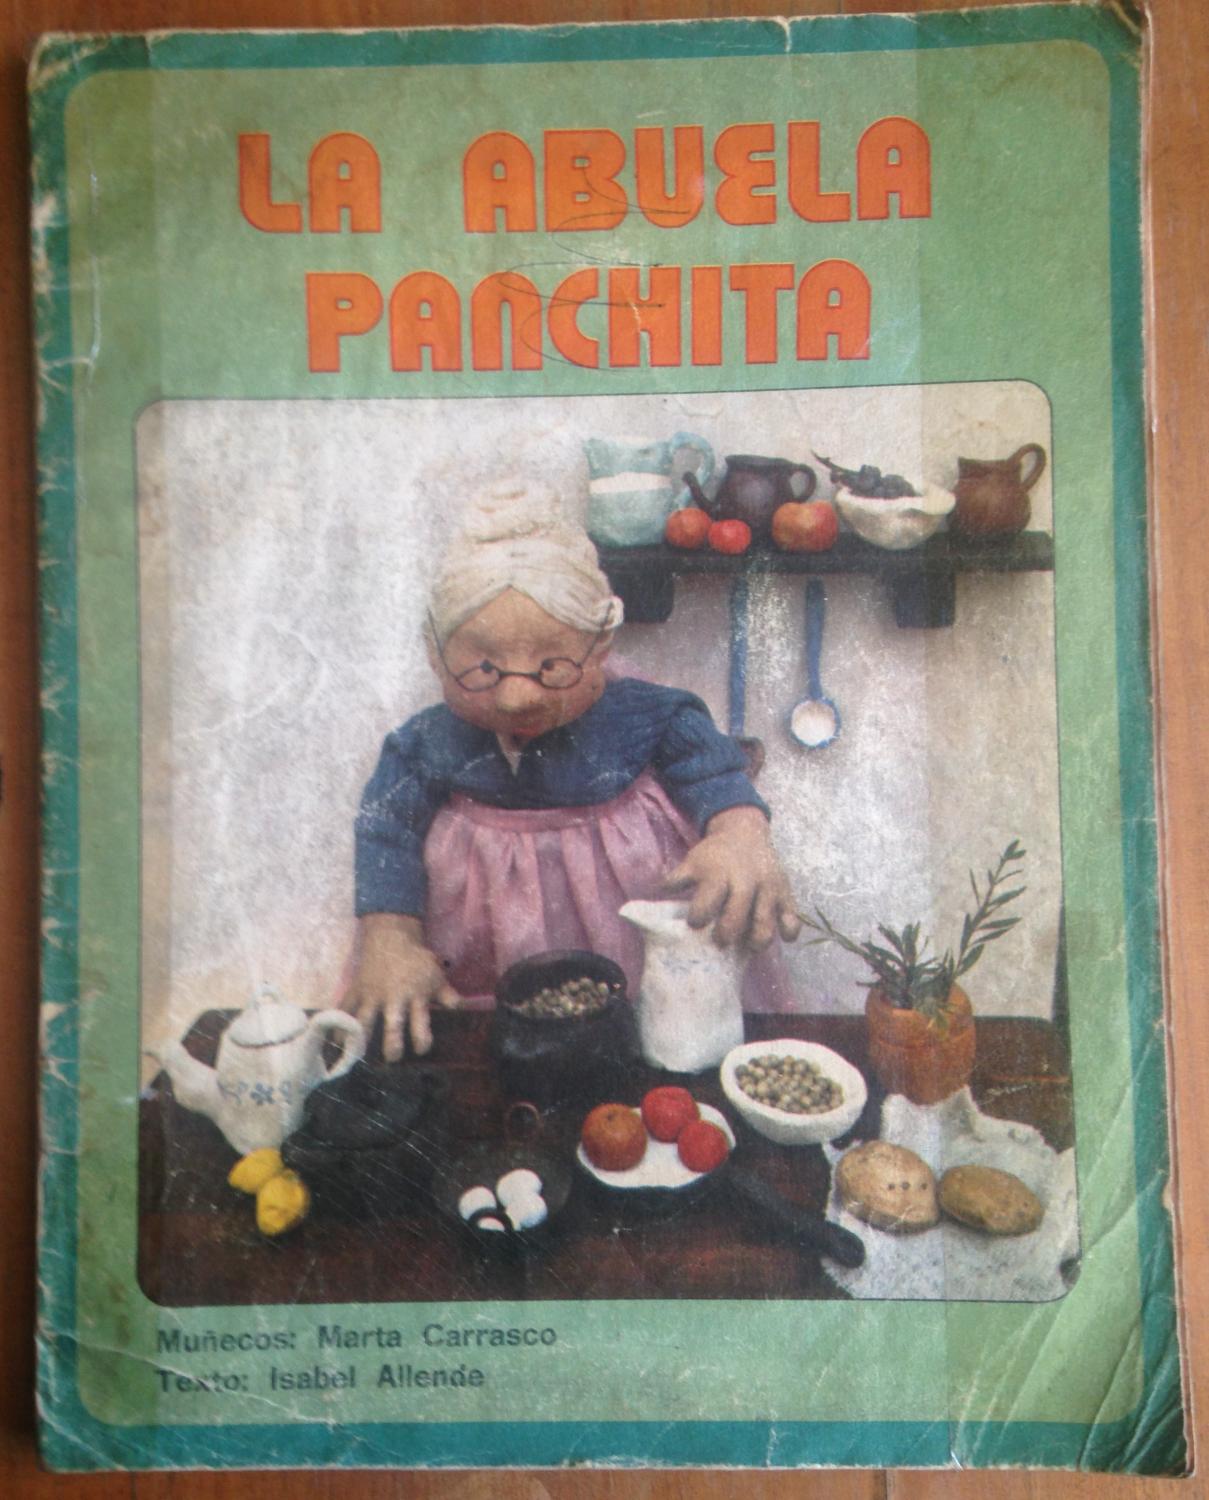 Isabel Allende. La abuela panchita; muñecos Marta Carrasco.